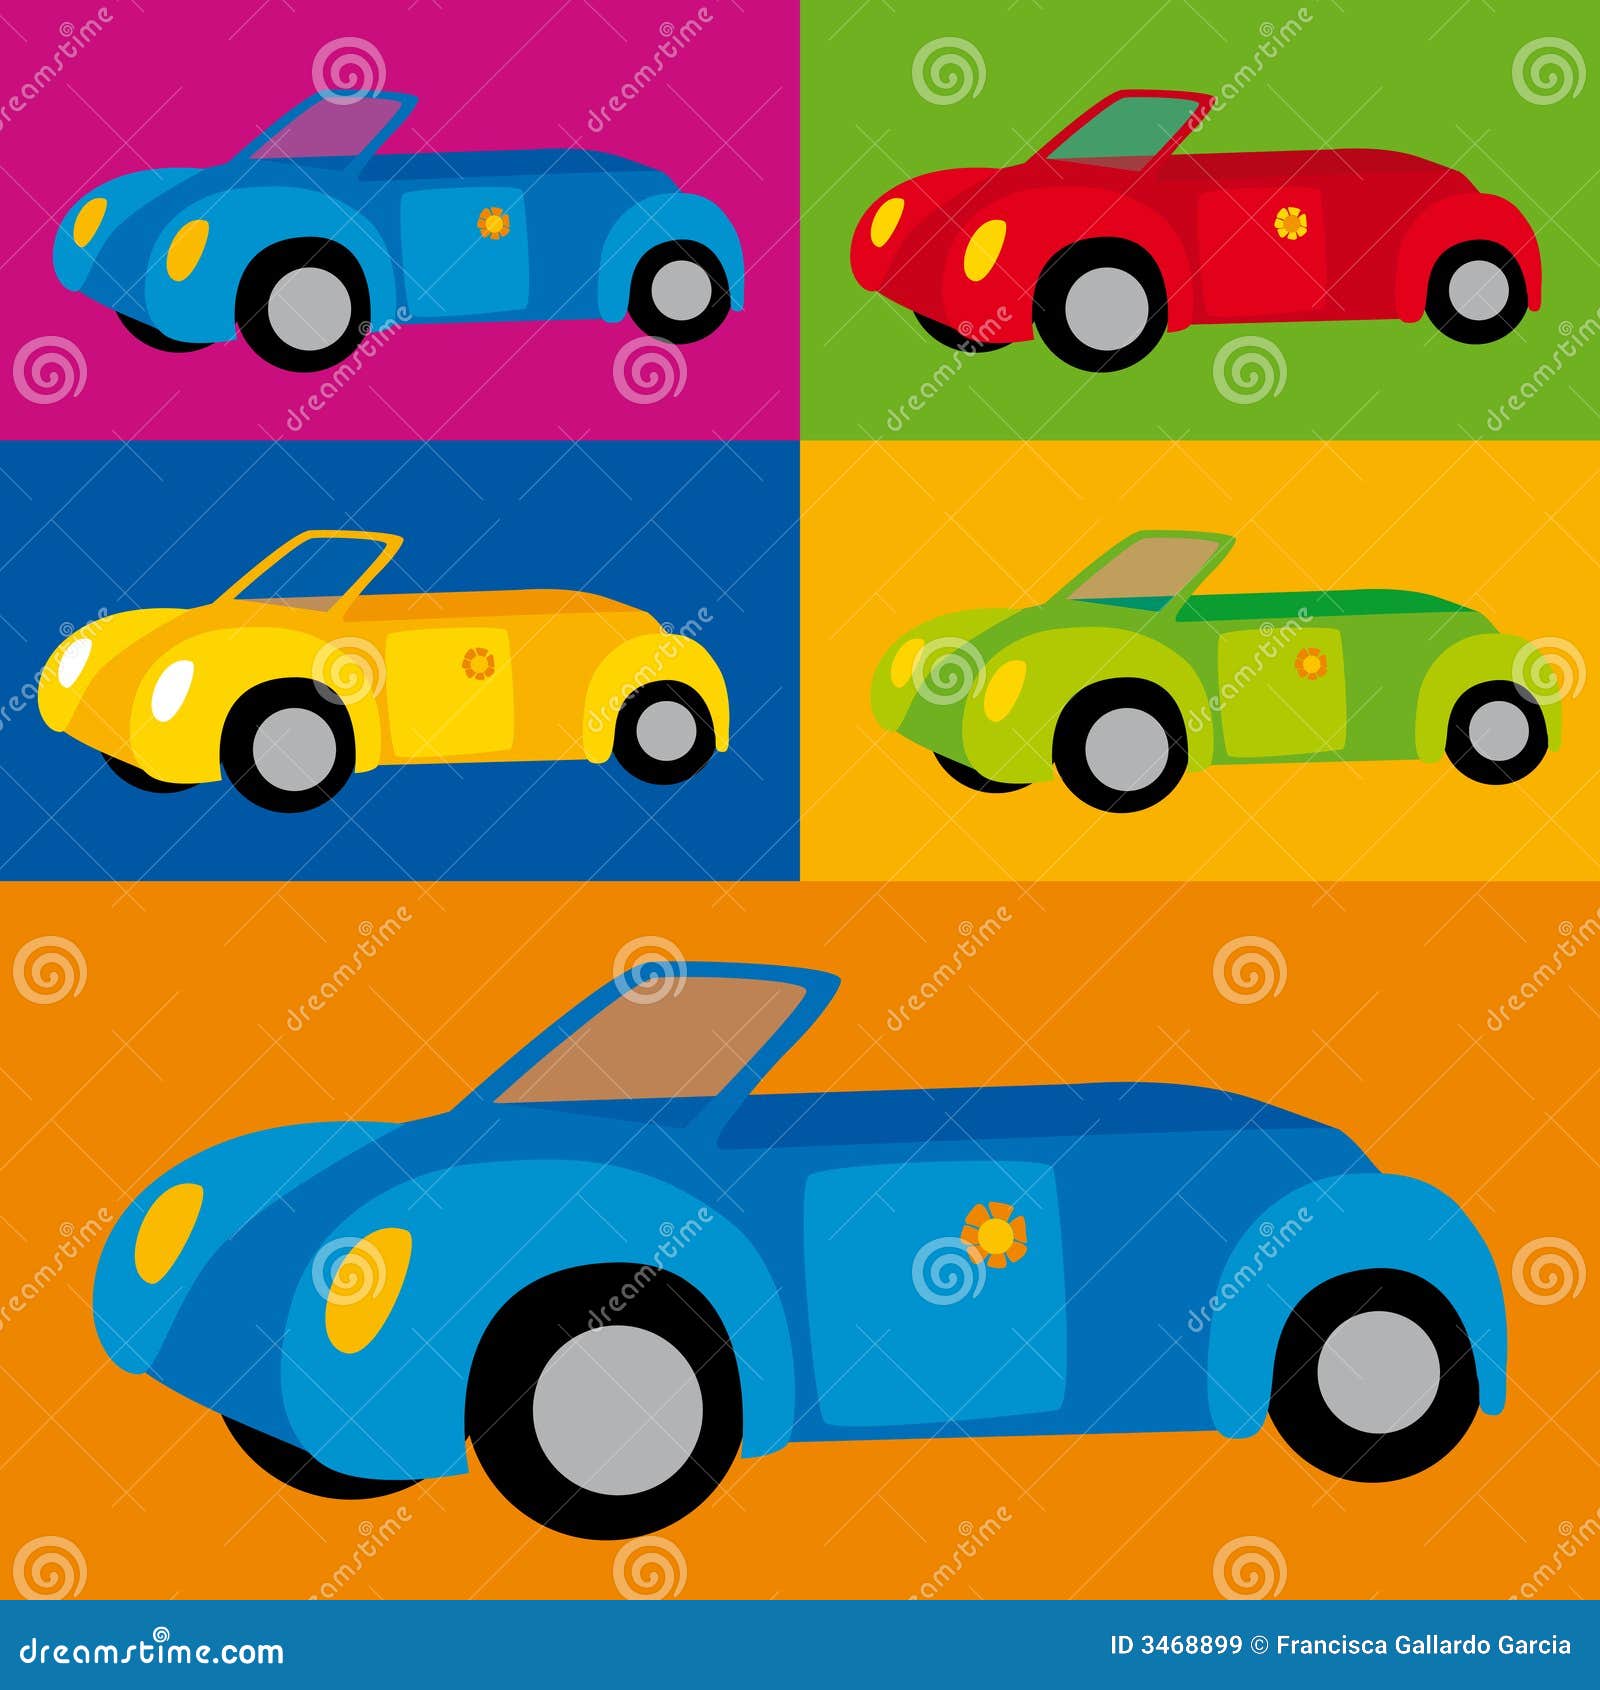 Pop art cars stock illustrations â pop art cars stock illustrations vectors clipart